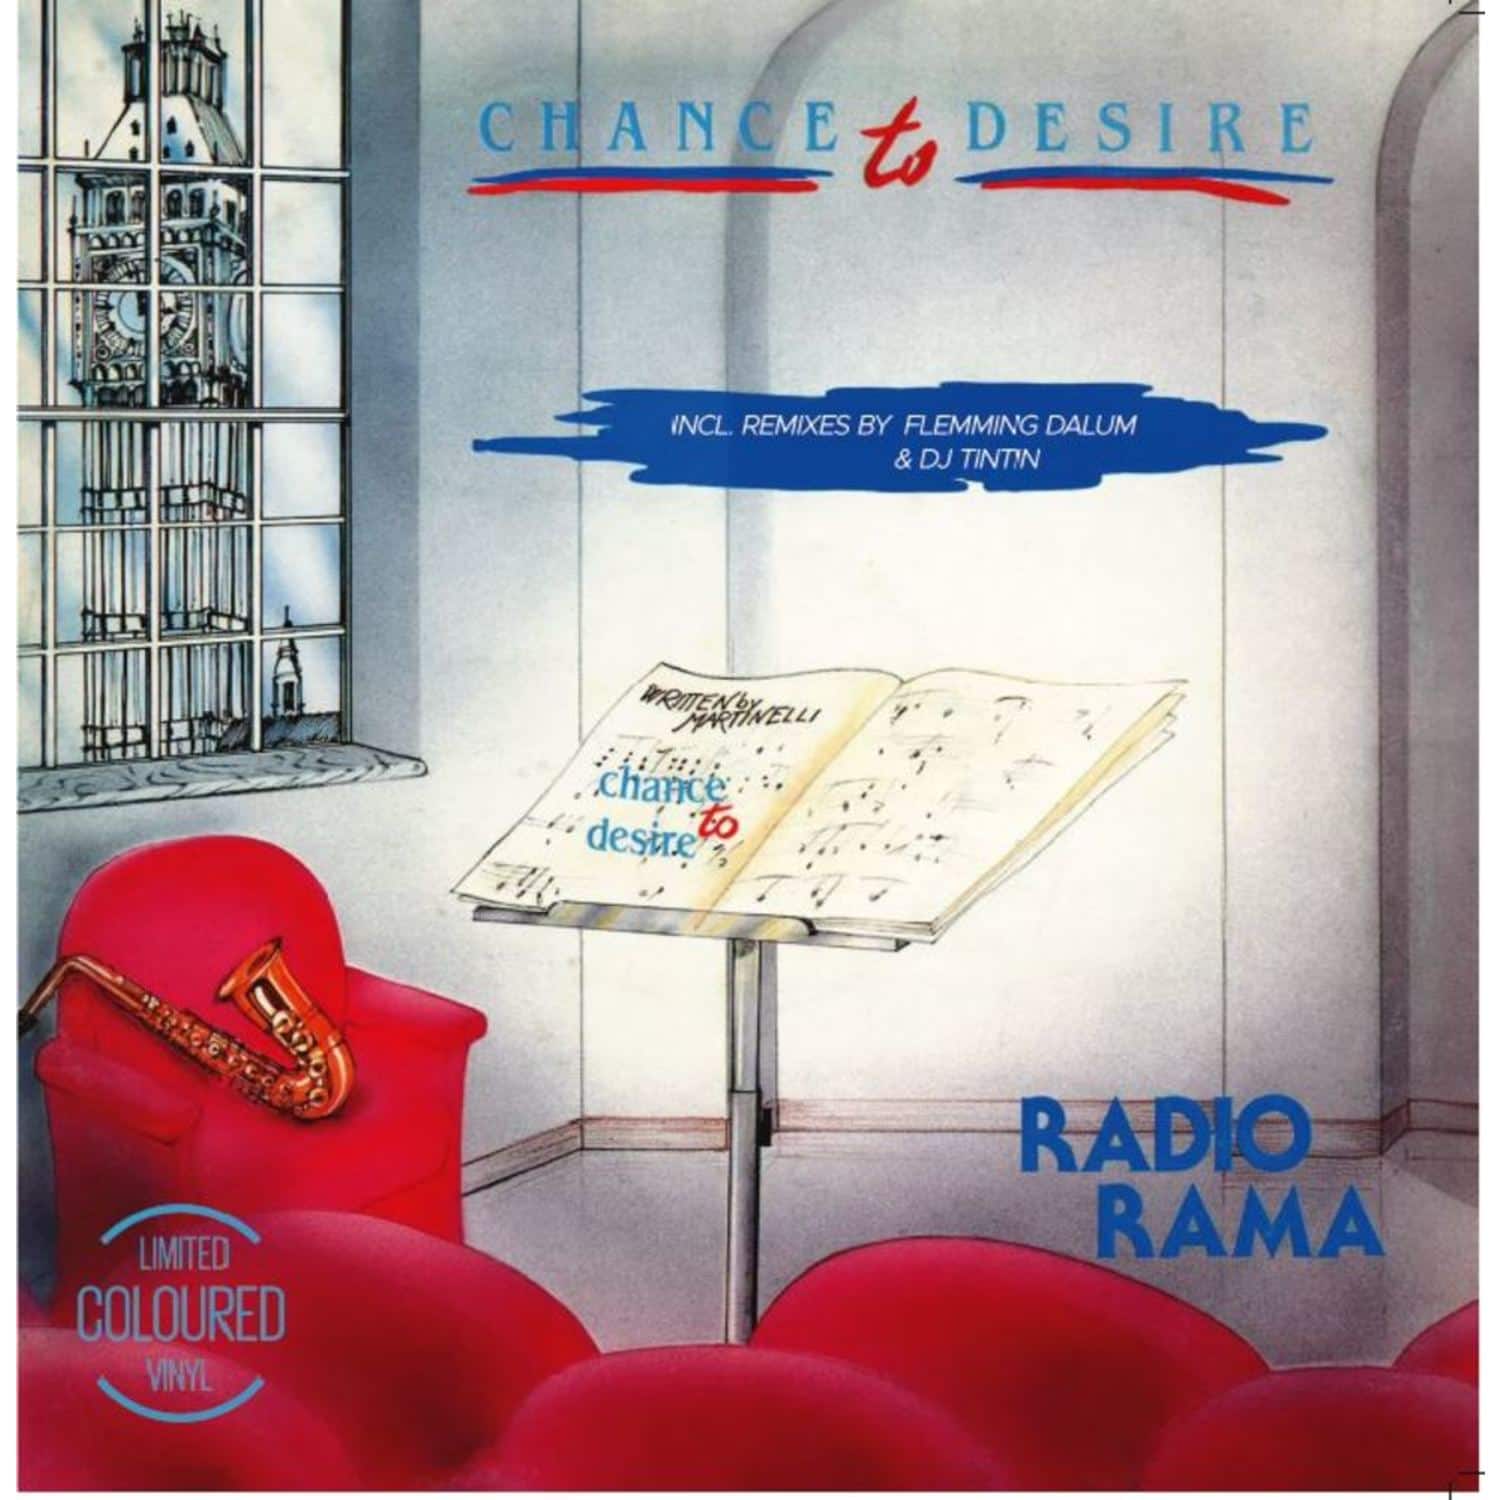 Radiorama - CHANCE TO DESIRE